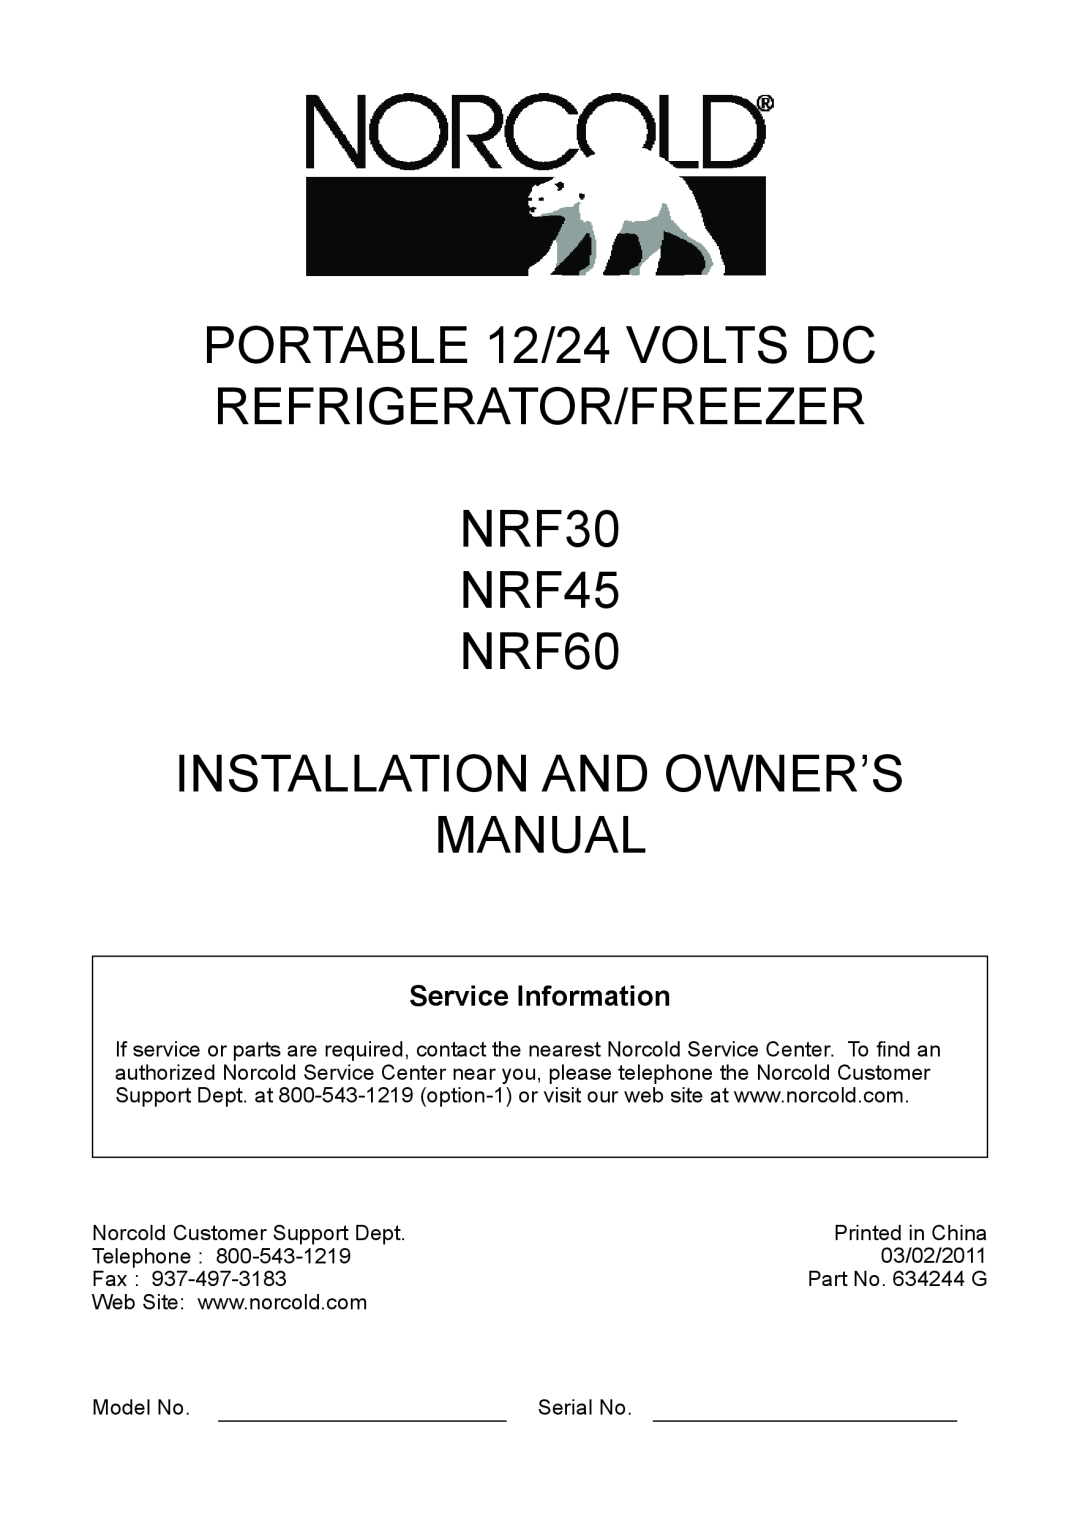 Norcold NRF30 manual Service Information, PORTABLE 12/24 VOLTS DC REFRIGERATOR/FREEZER 